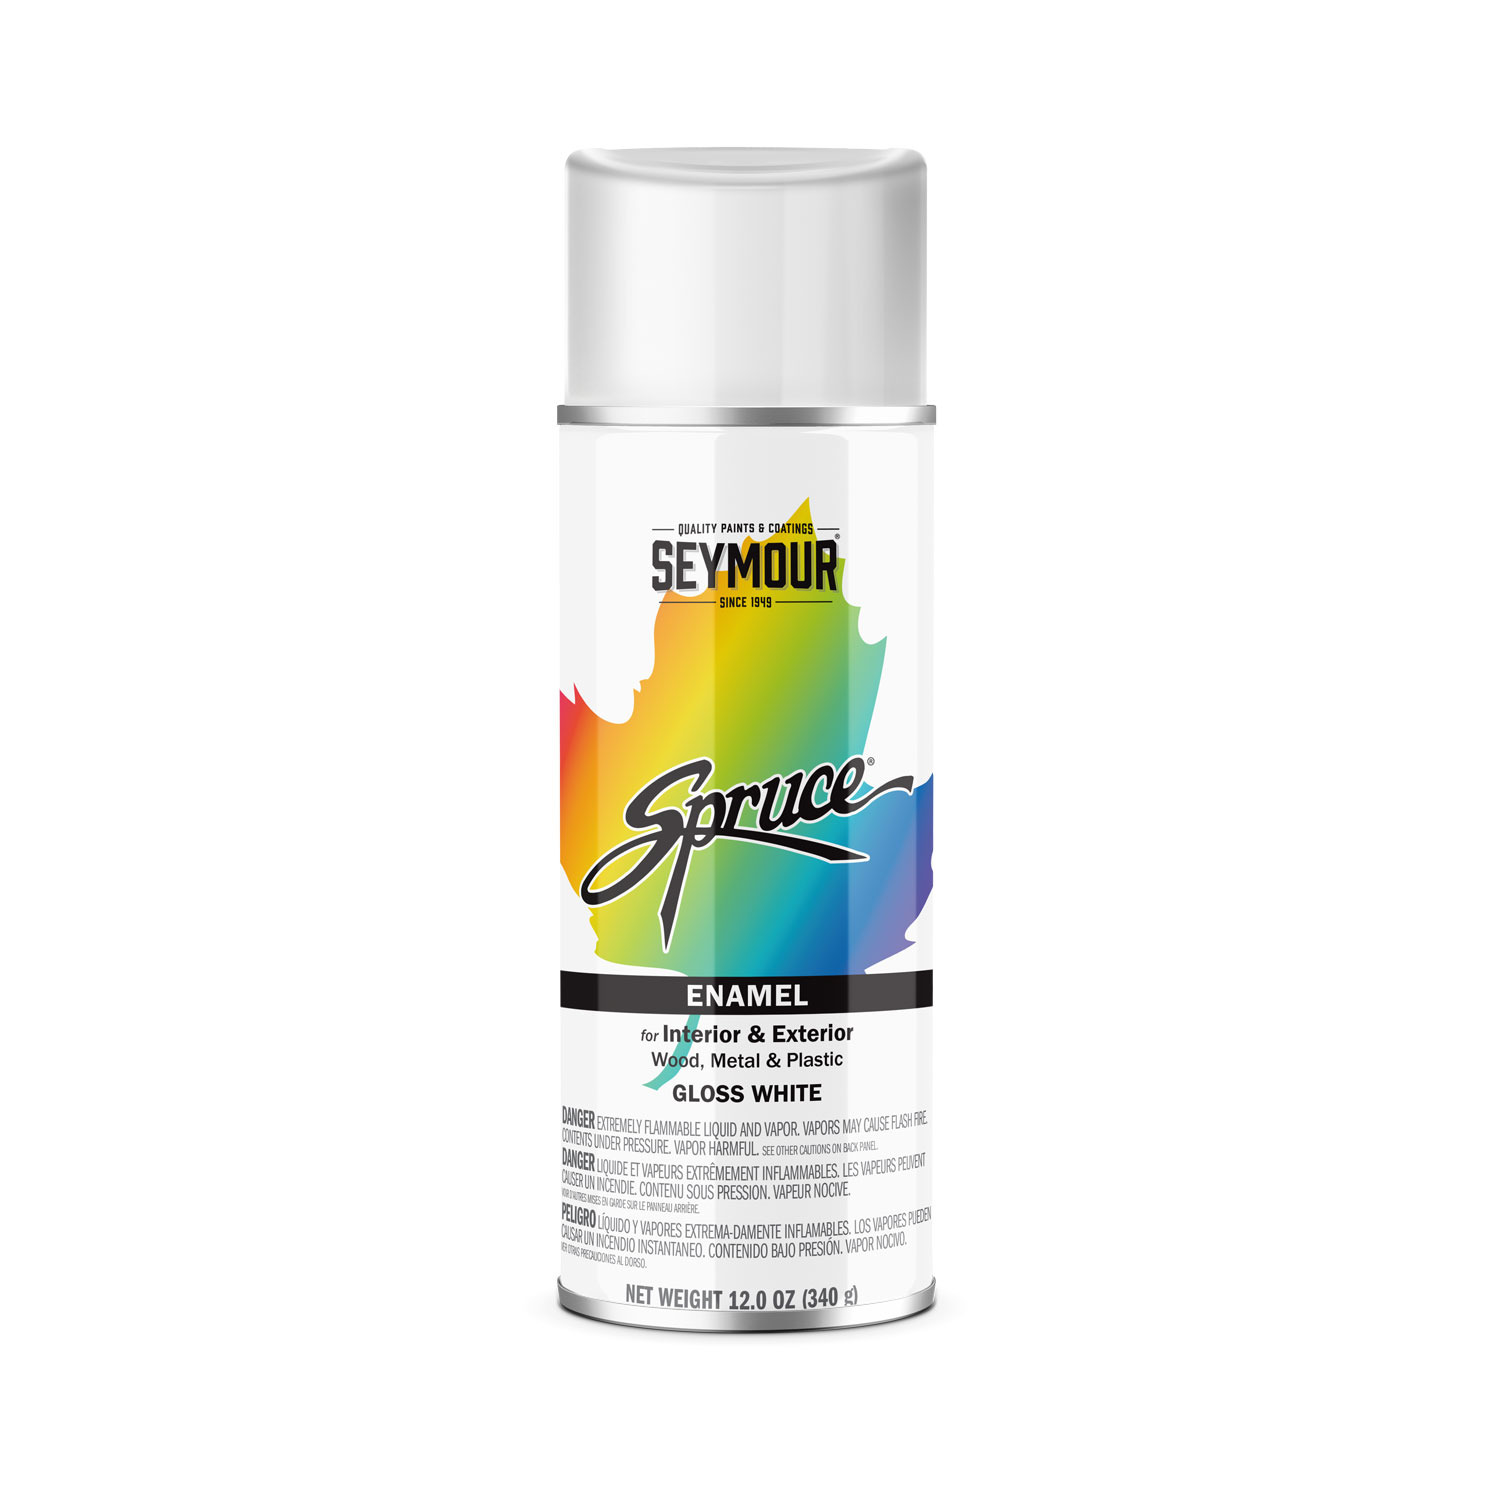 98-2 Seymour Spruce Enamel Spray Paint